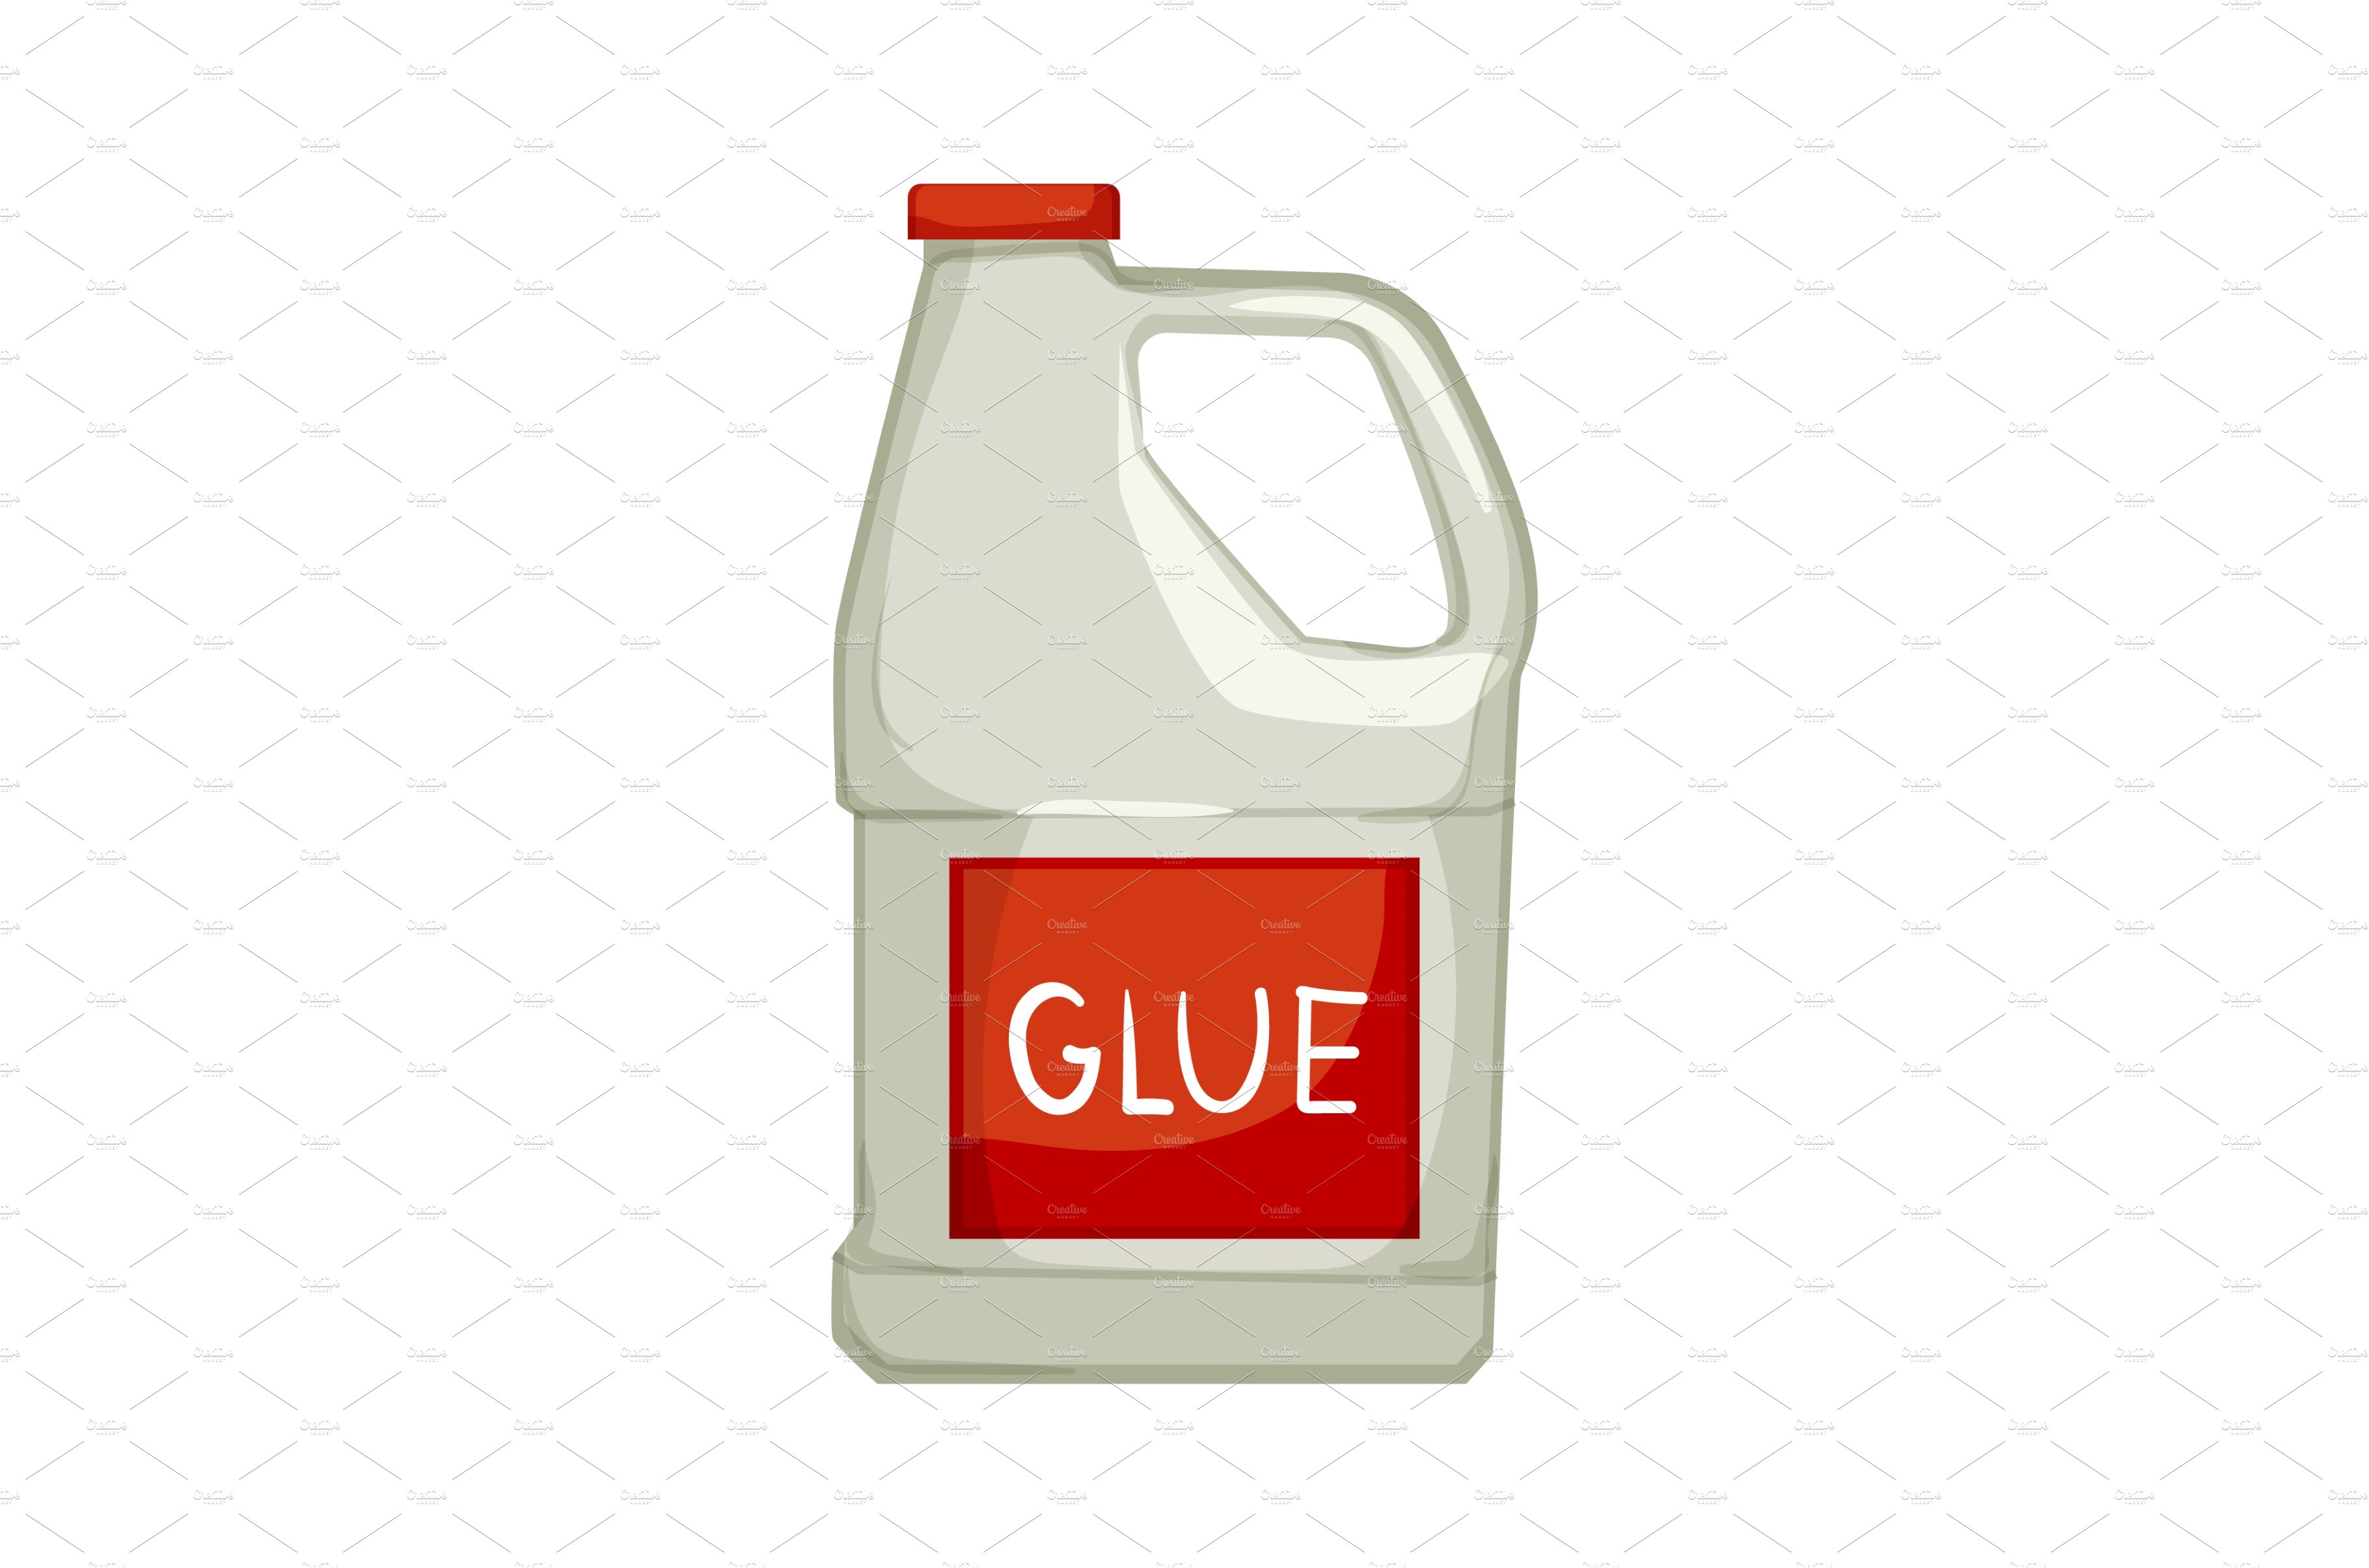 office glue bottle cartoon vector cover image.